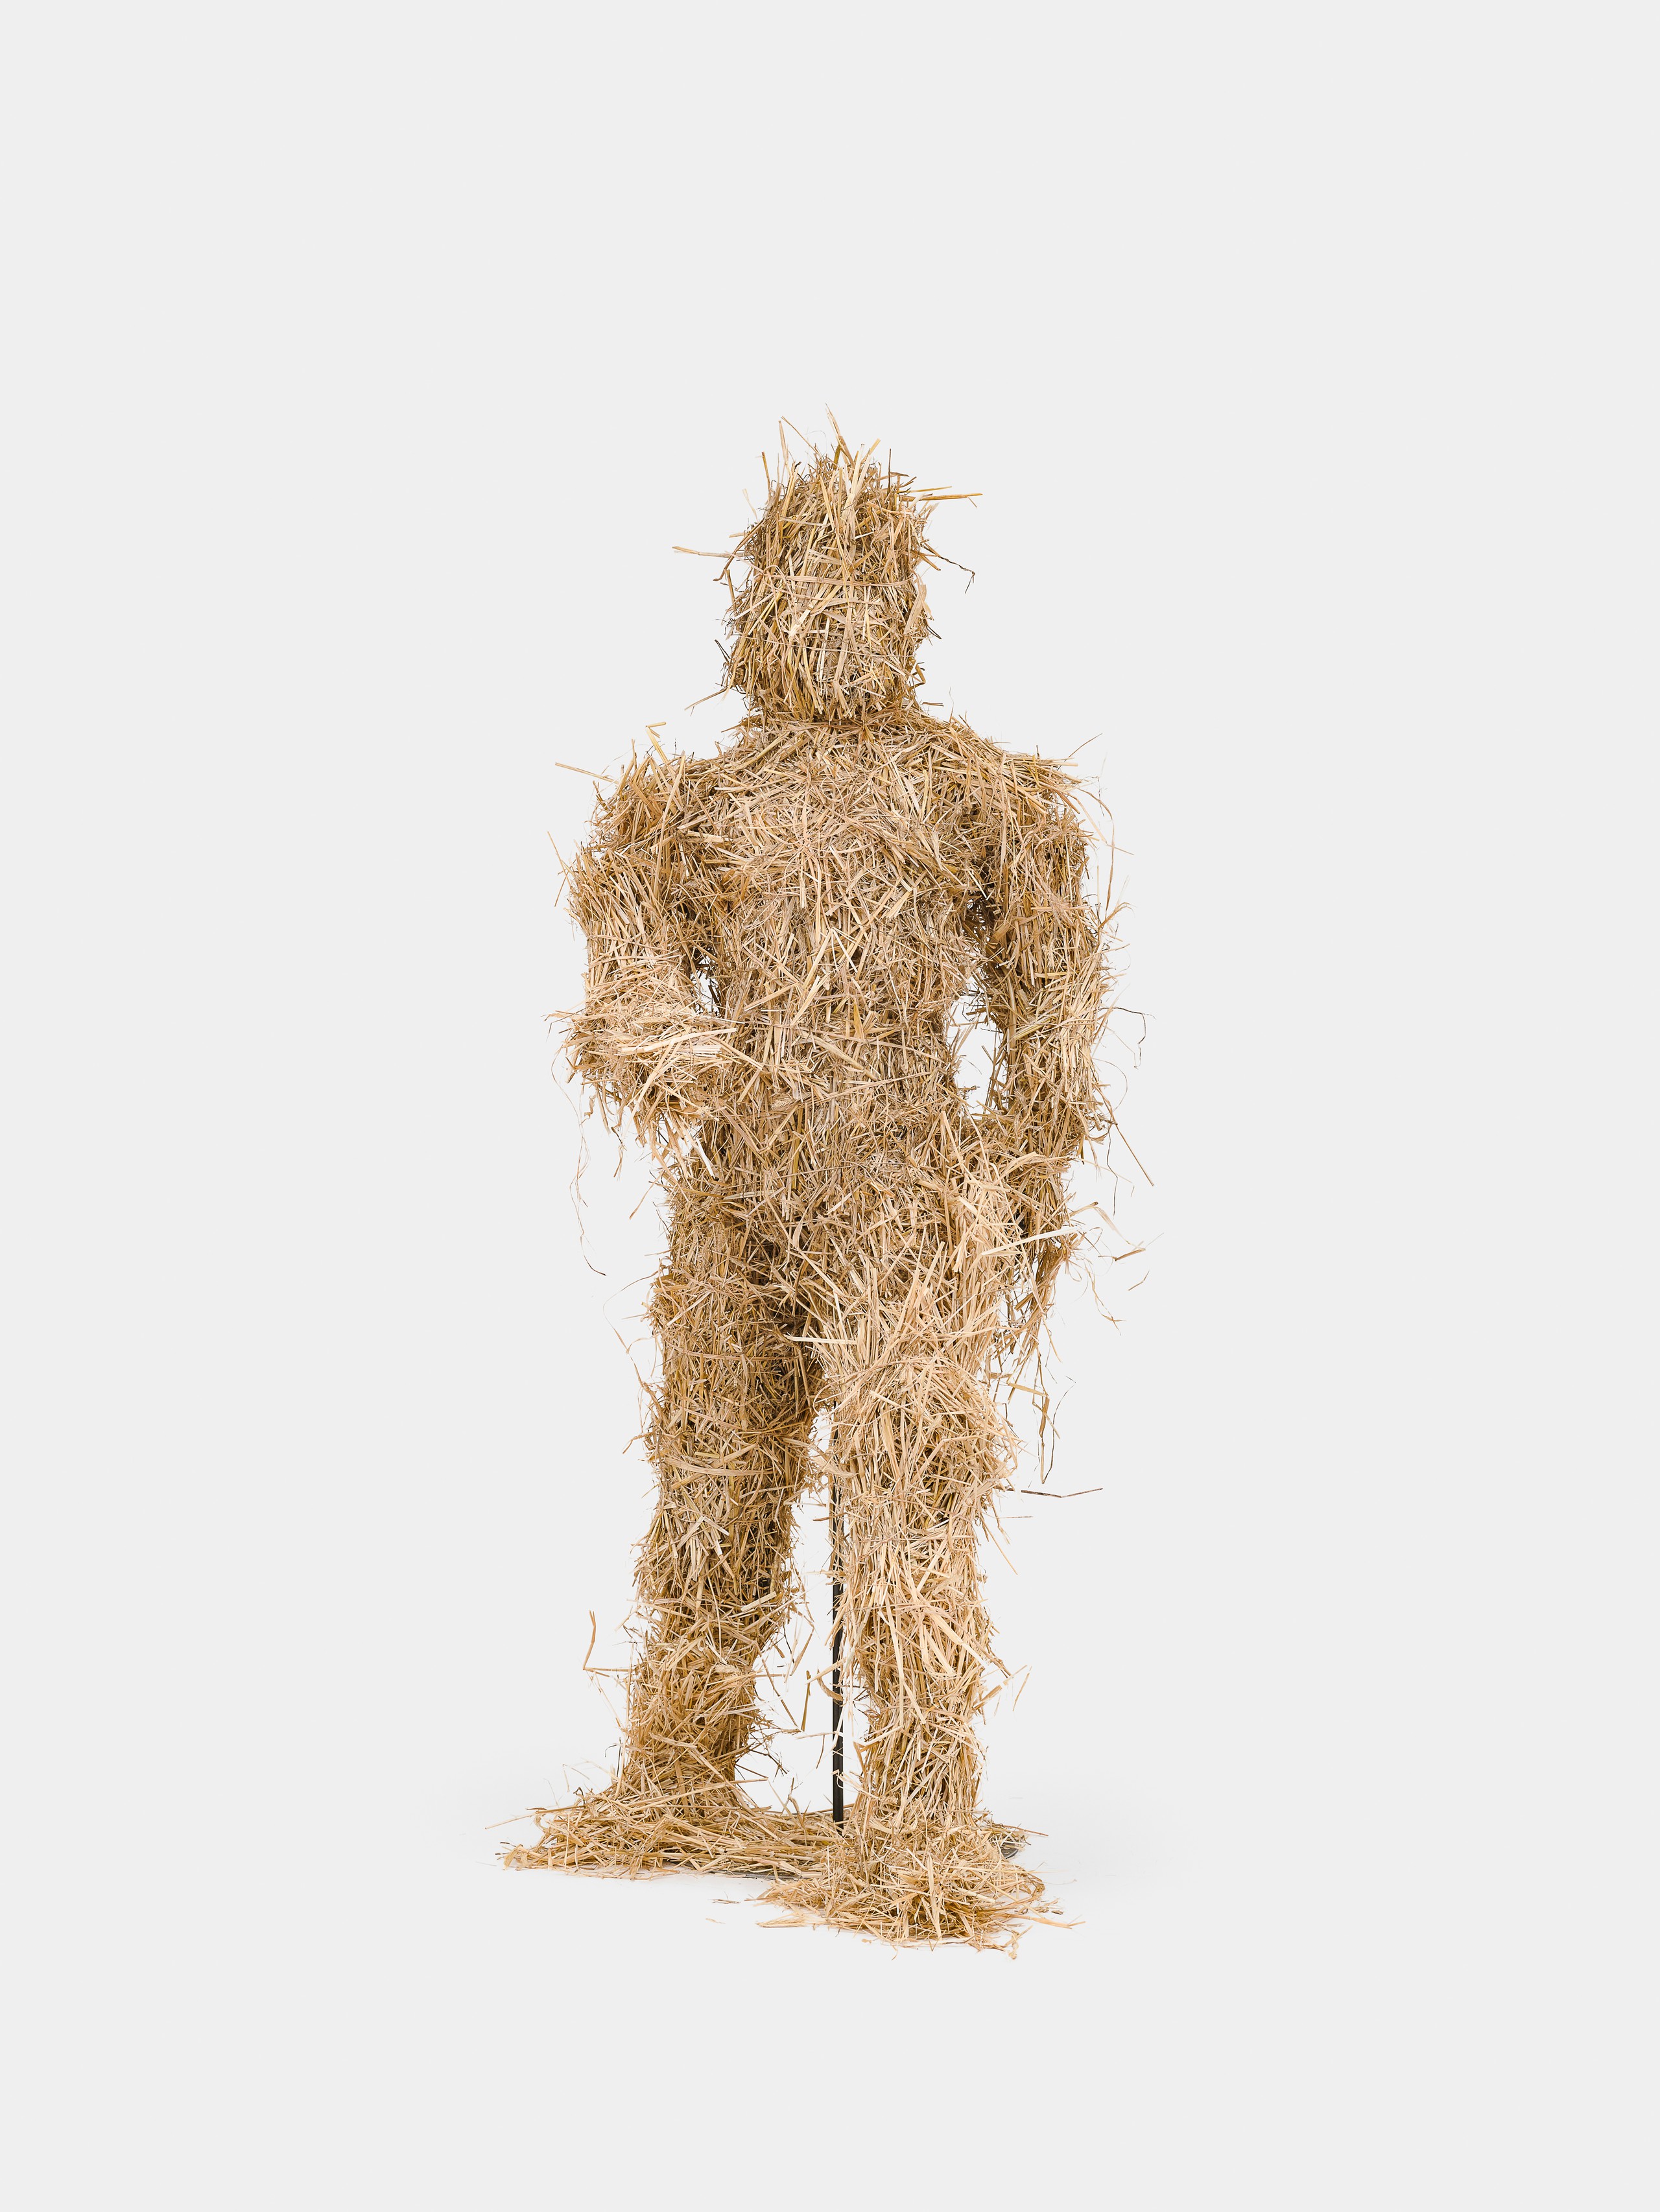 Kaspar Müller, Untitled, 2022, Straw, fiberglass, wood, steel 200 × 80 × 115 cm, 78 1/2 × 31 1/2 × 45 1/2 in